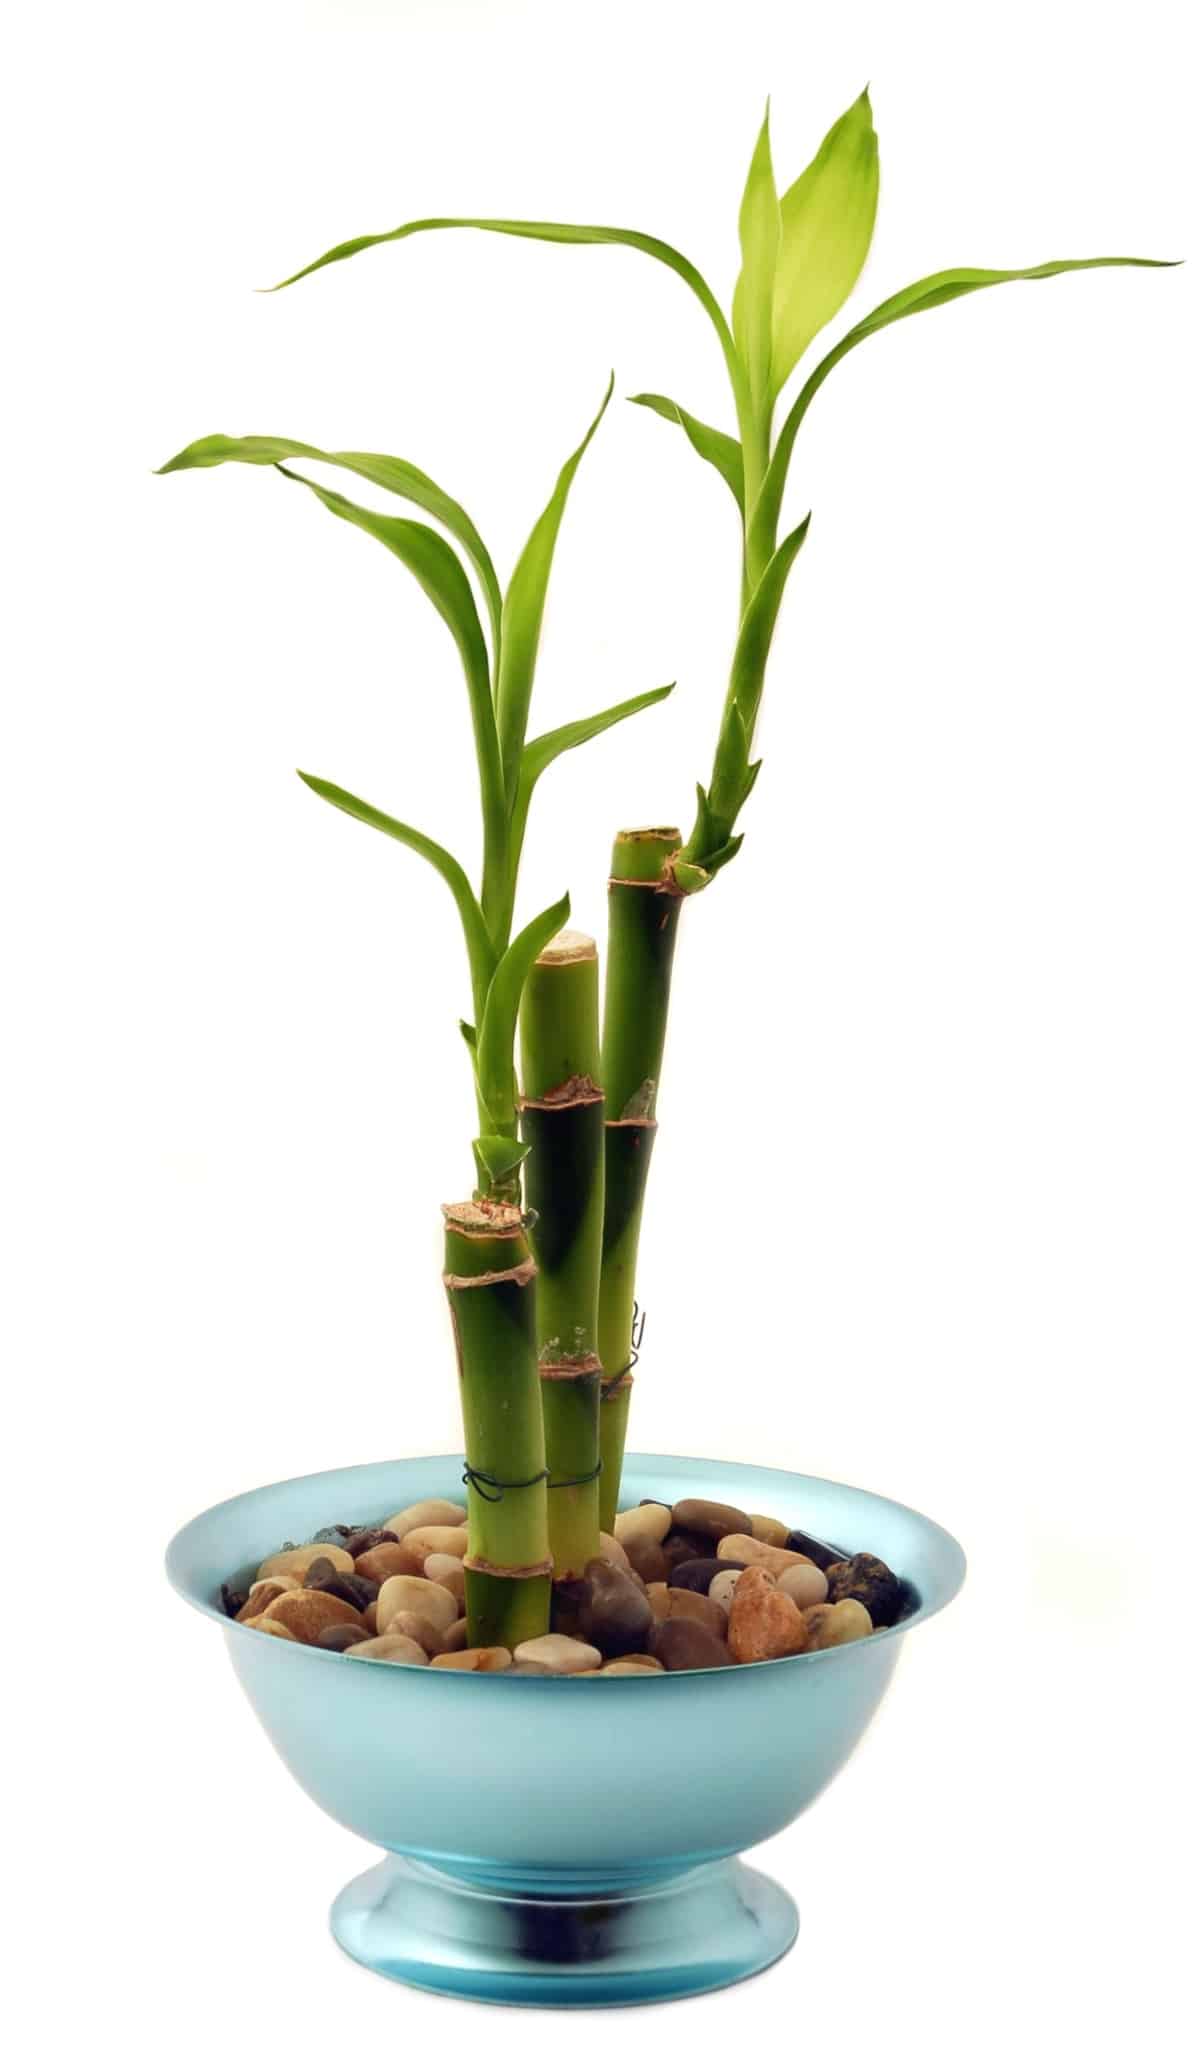 [DIAGRAM] Diagram Of A Bamboo Plant - MYDIAGRAM.ONLINE